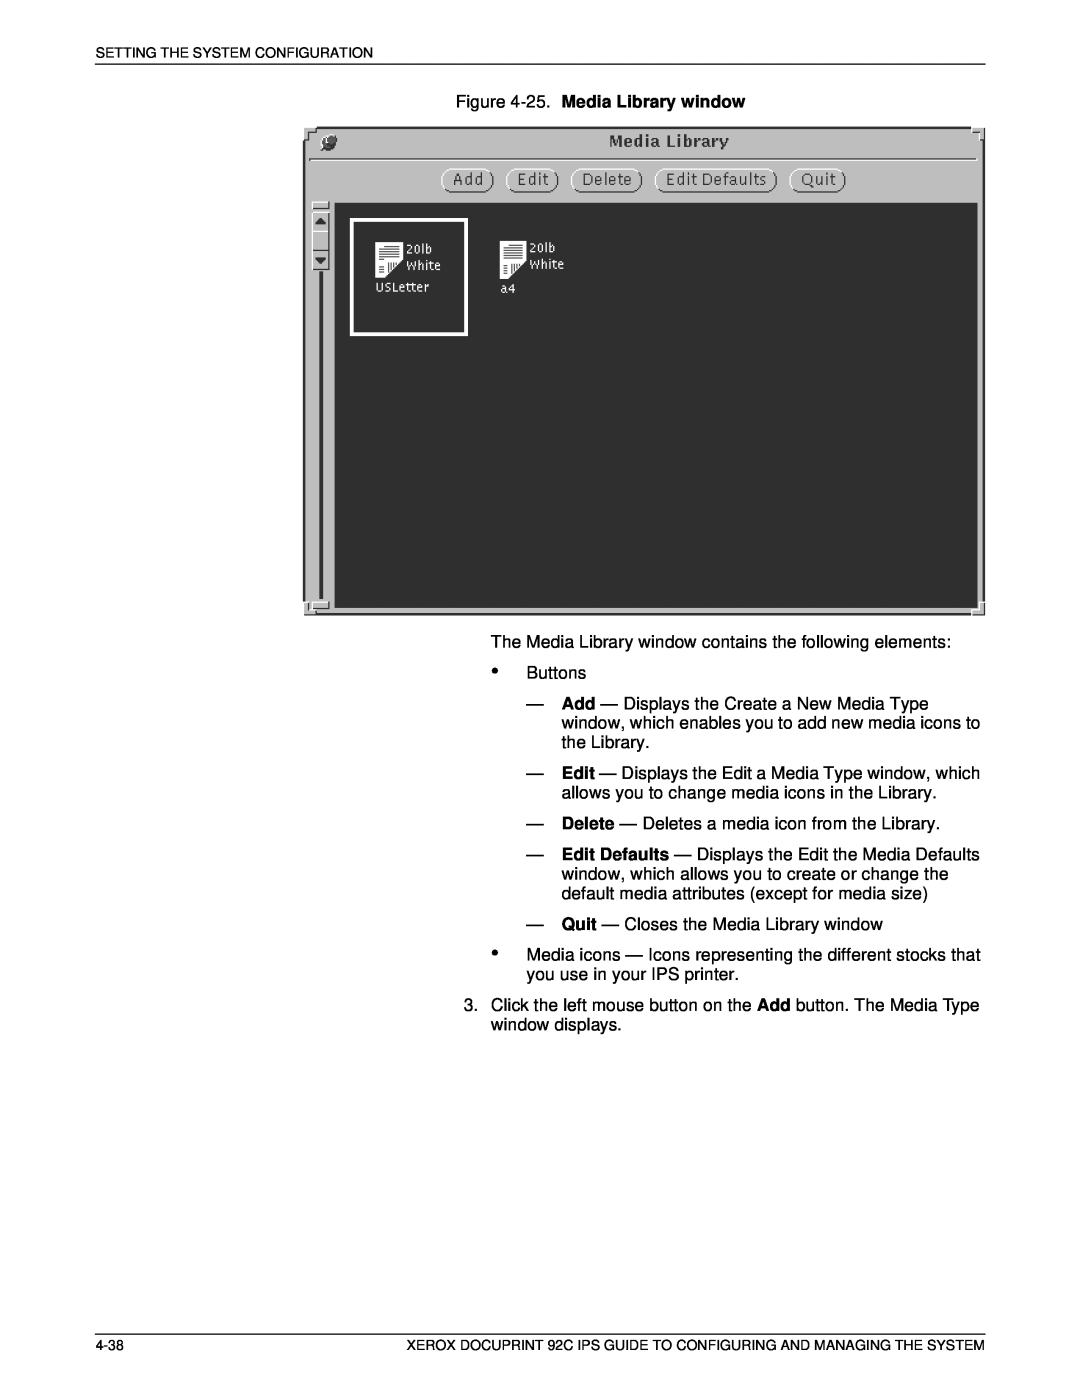 Xerox 92C IPS manual 25. Media Library window 